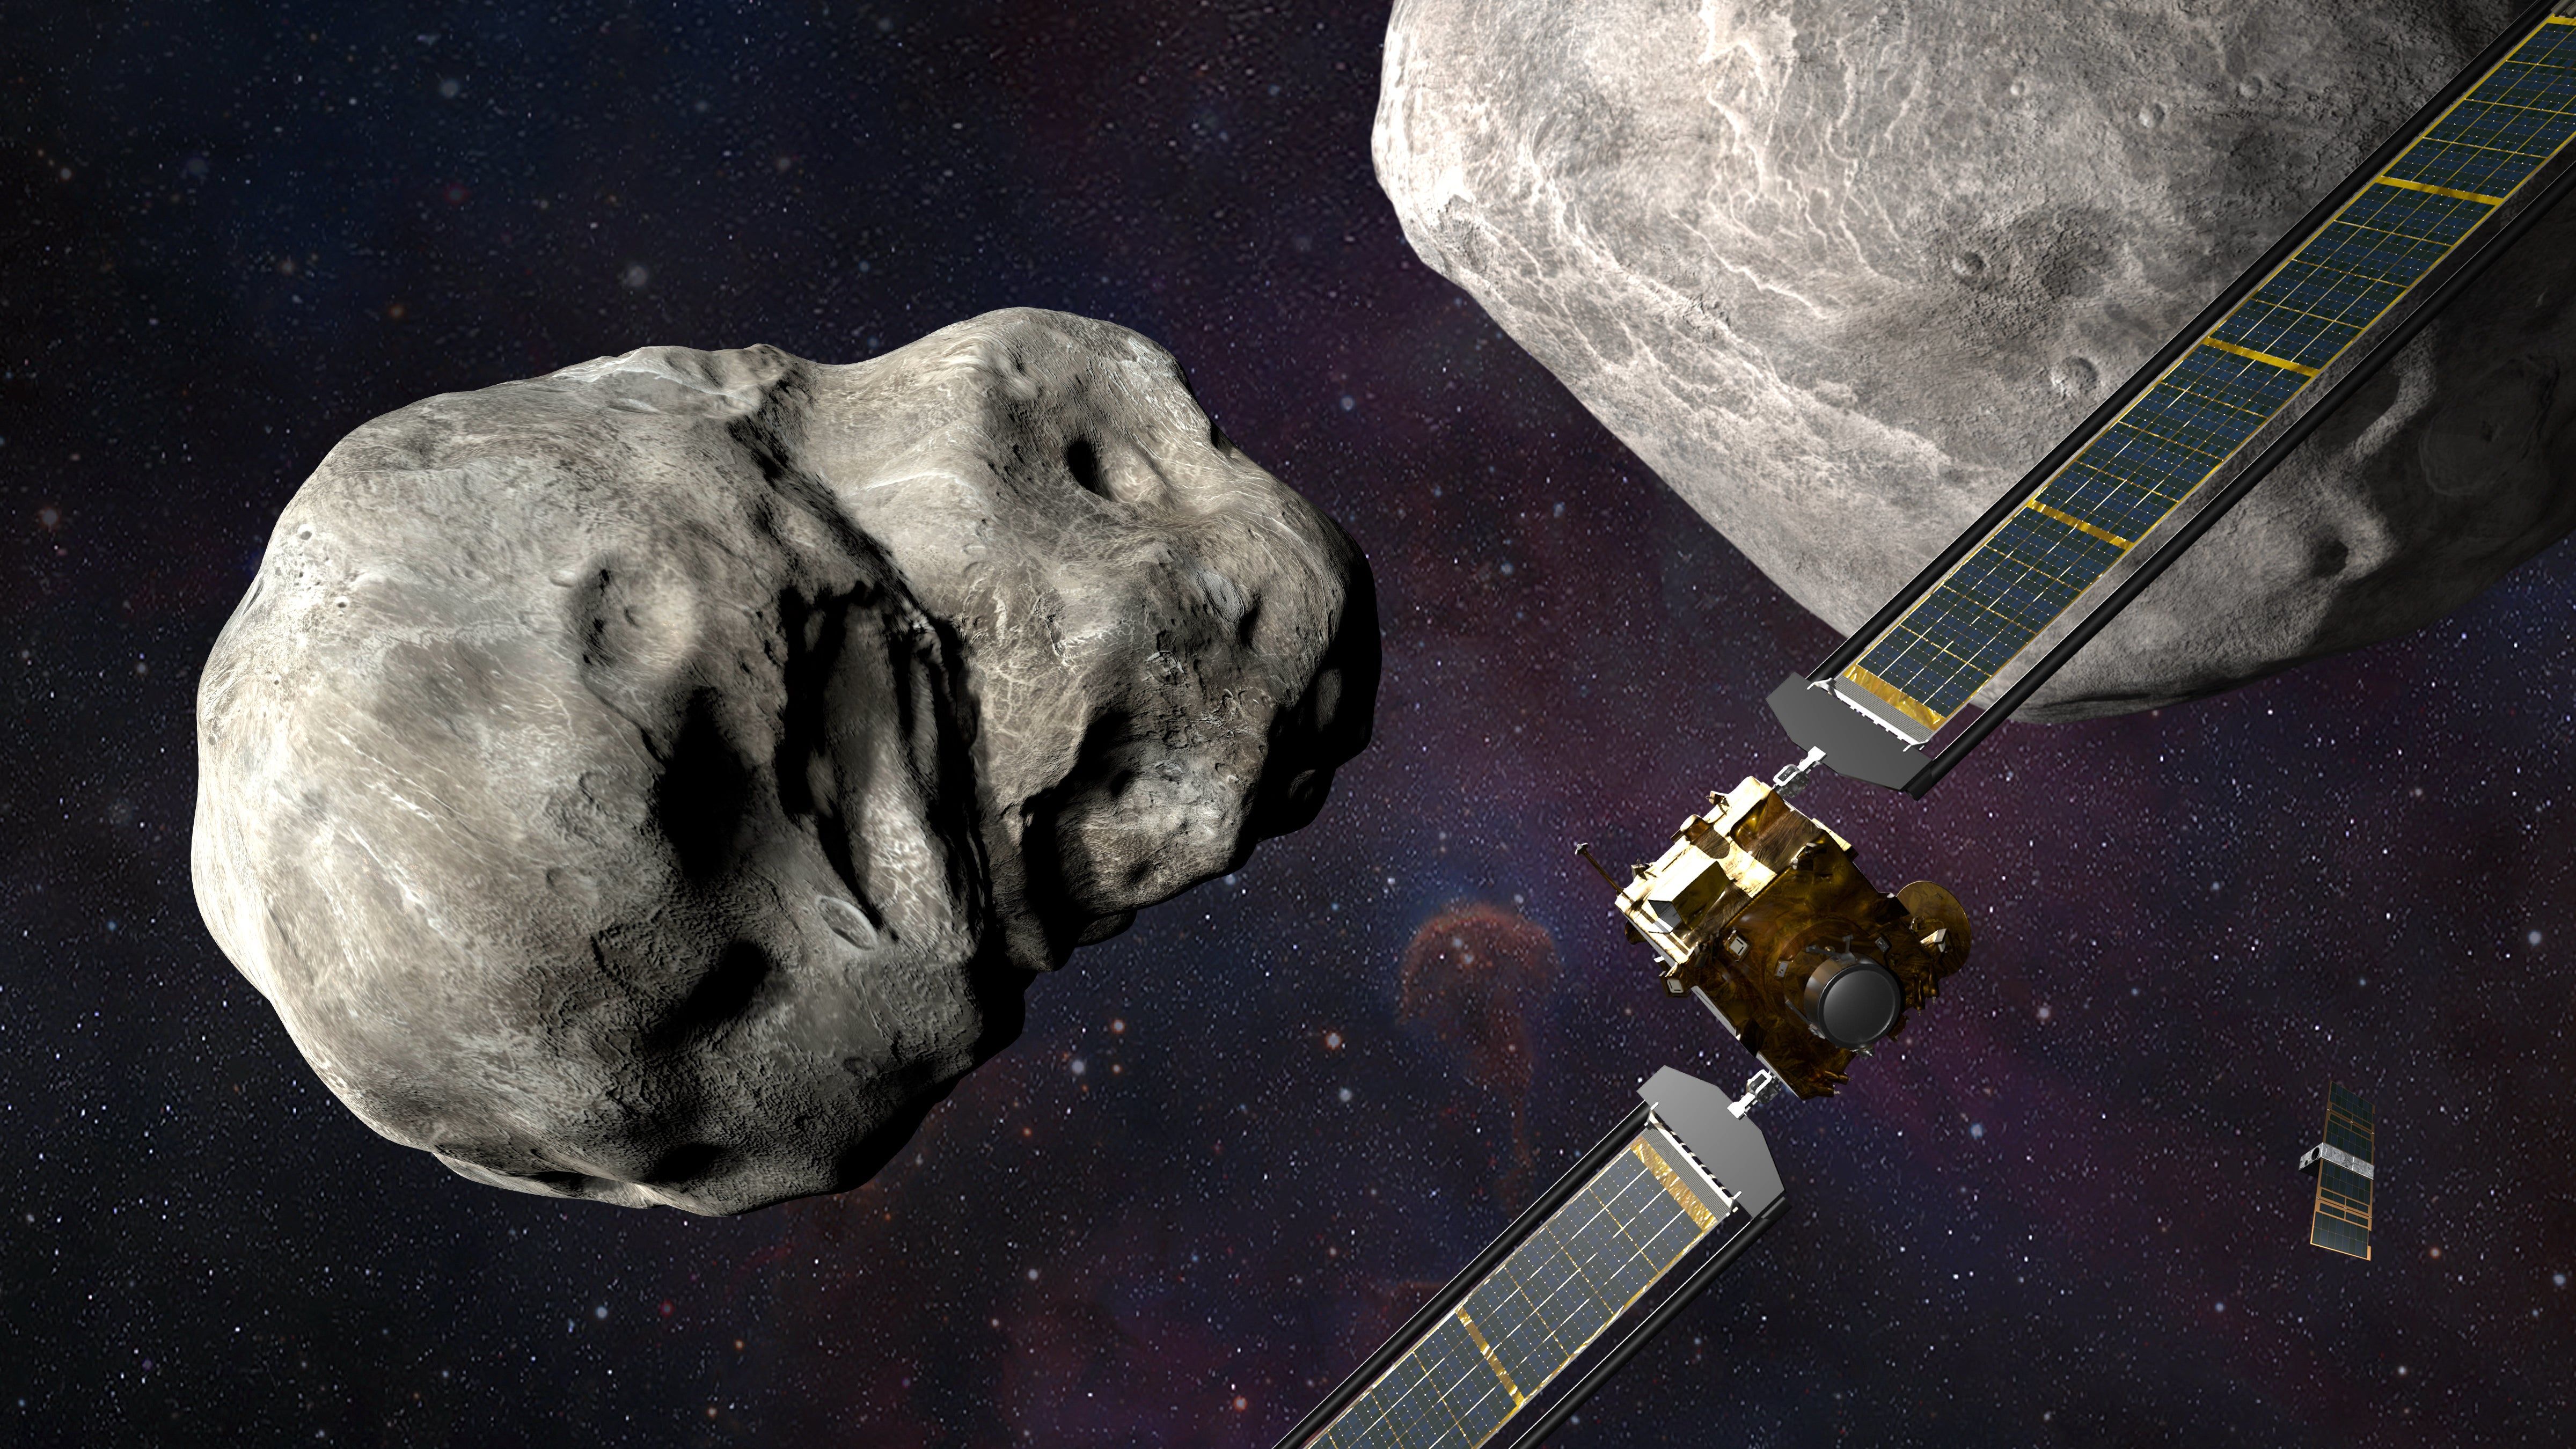 DART: NASA spacecraft crashes into an asteroid in defense test